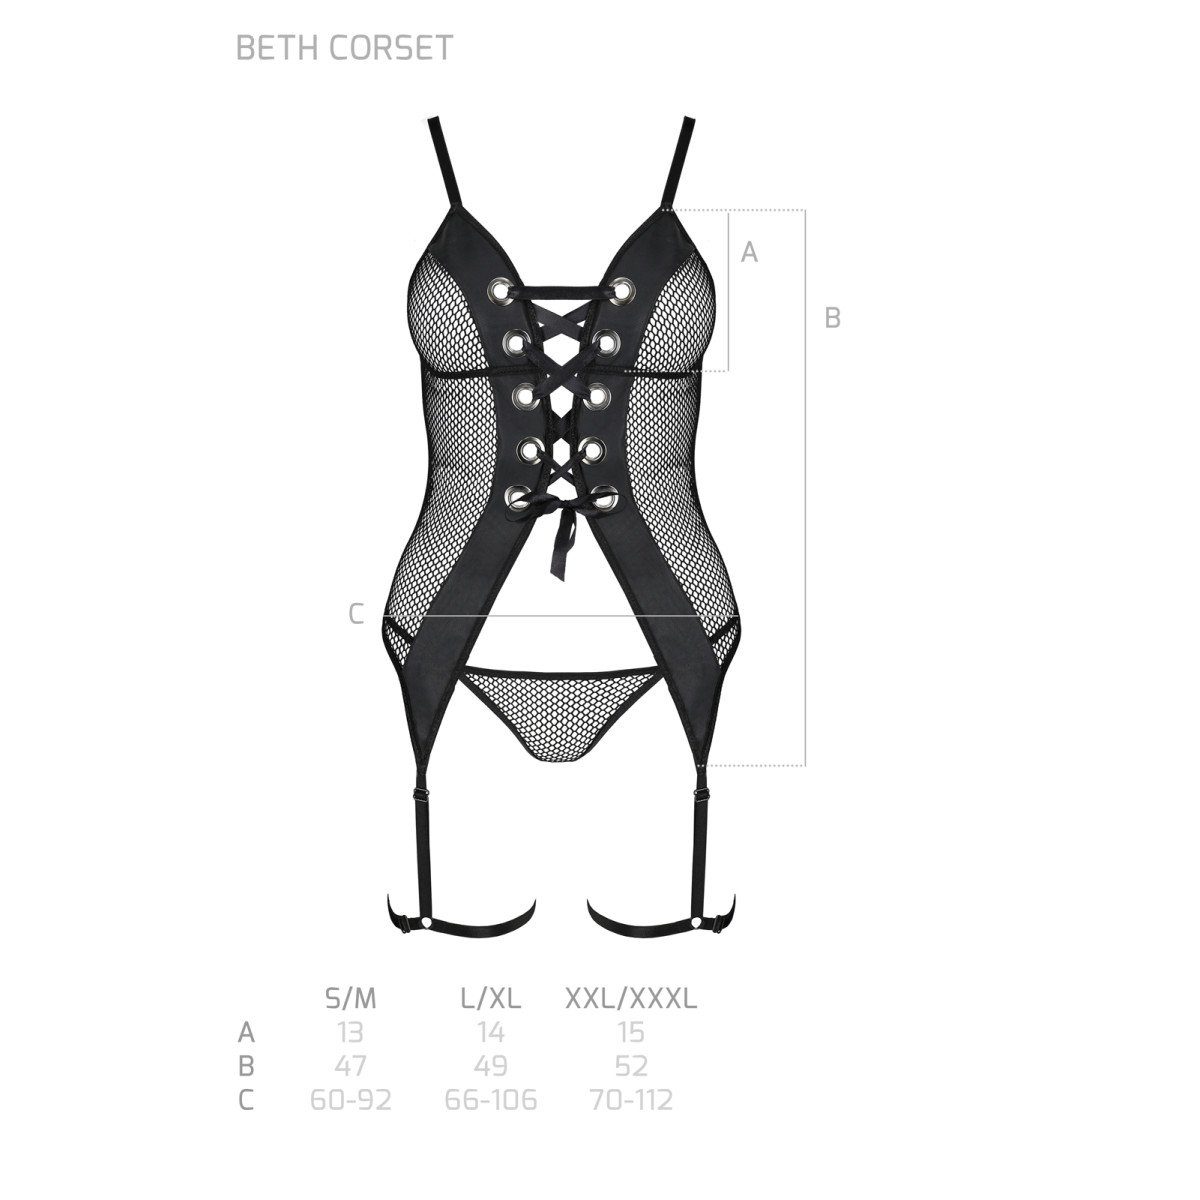 (L/XL,S/M,XXL) & Beth corset black - thong Corsage PE Passion-Exklusiv